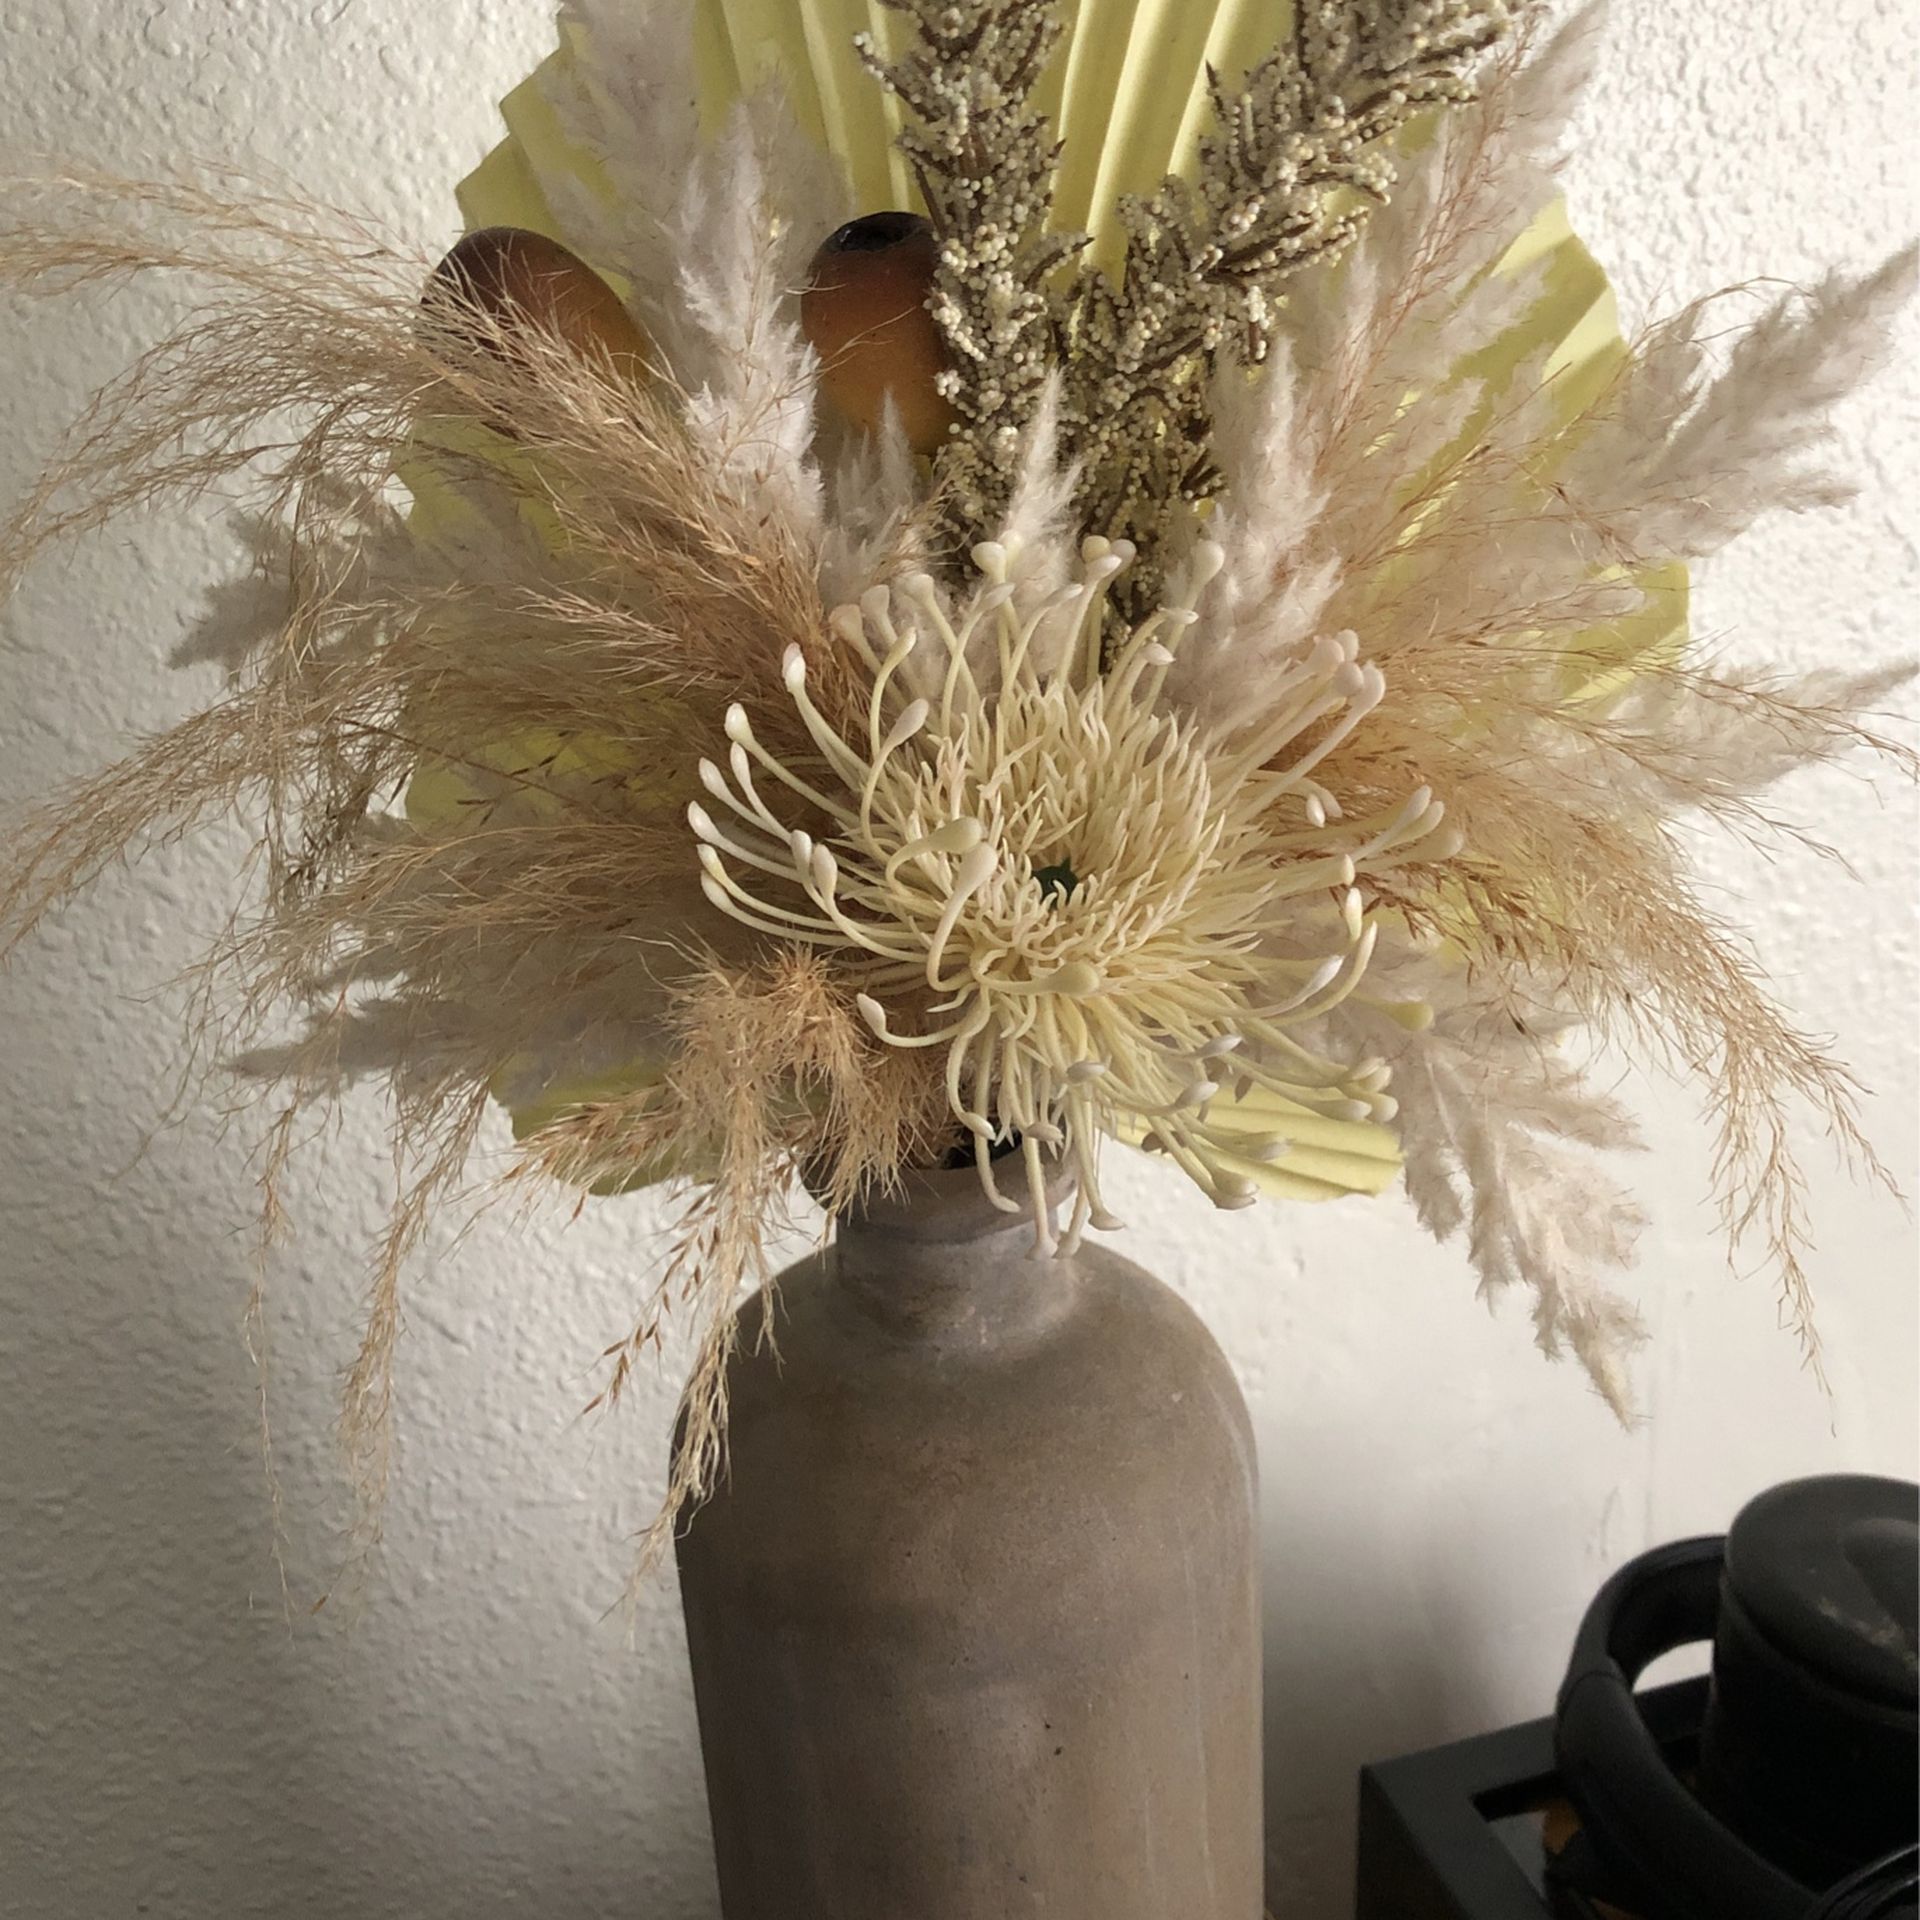 Flower Vase With Arrangement 